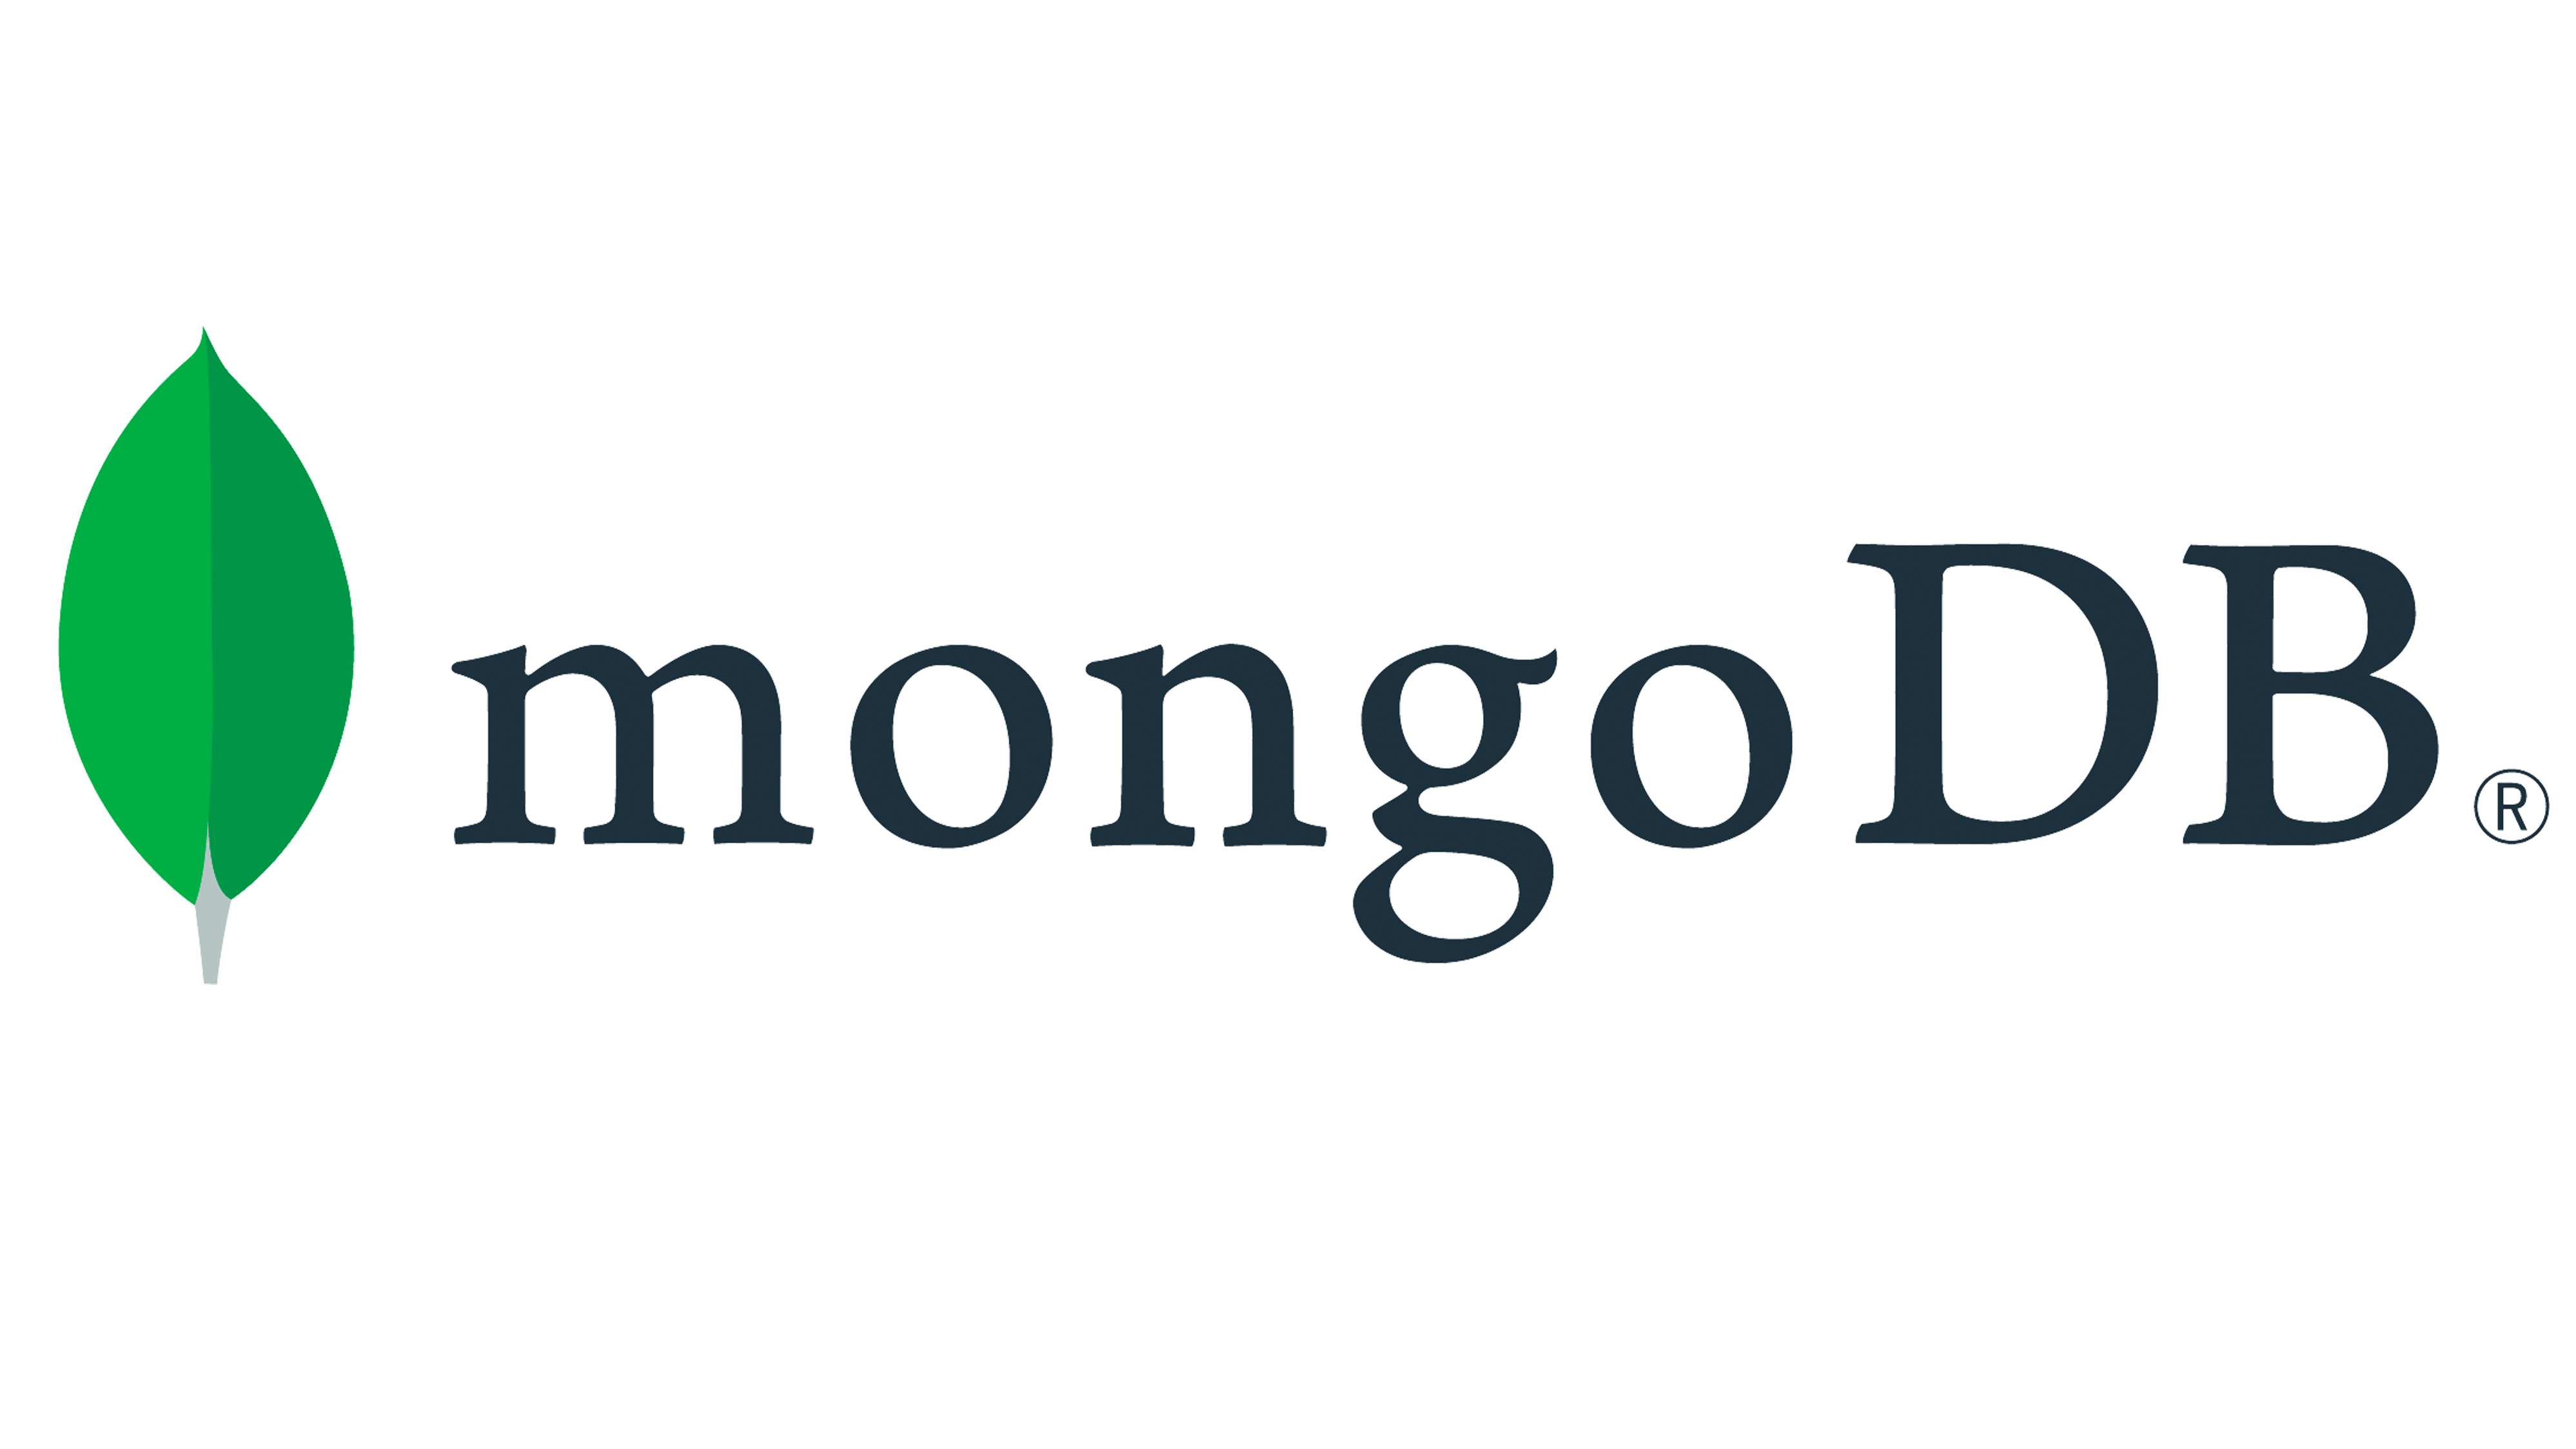 Mongo logo